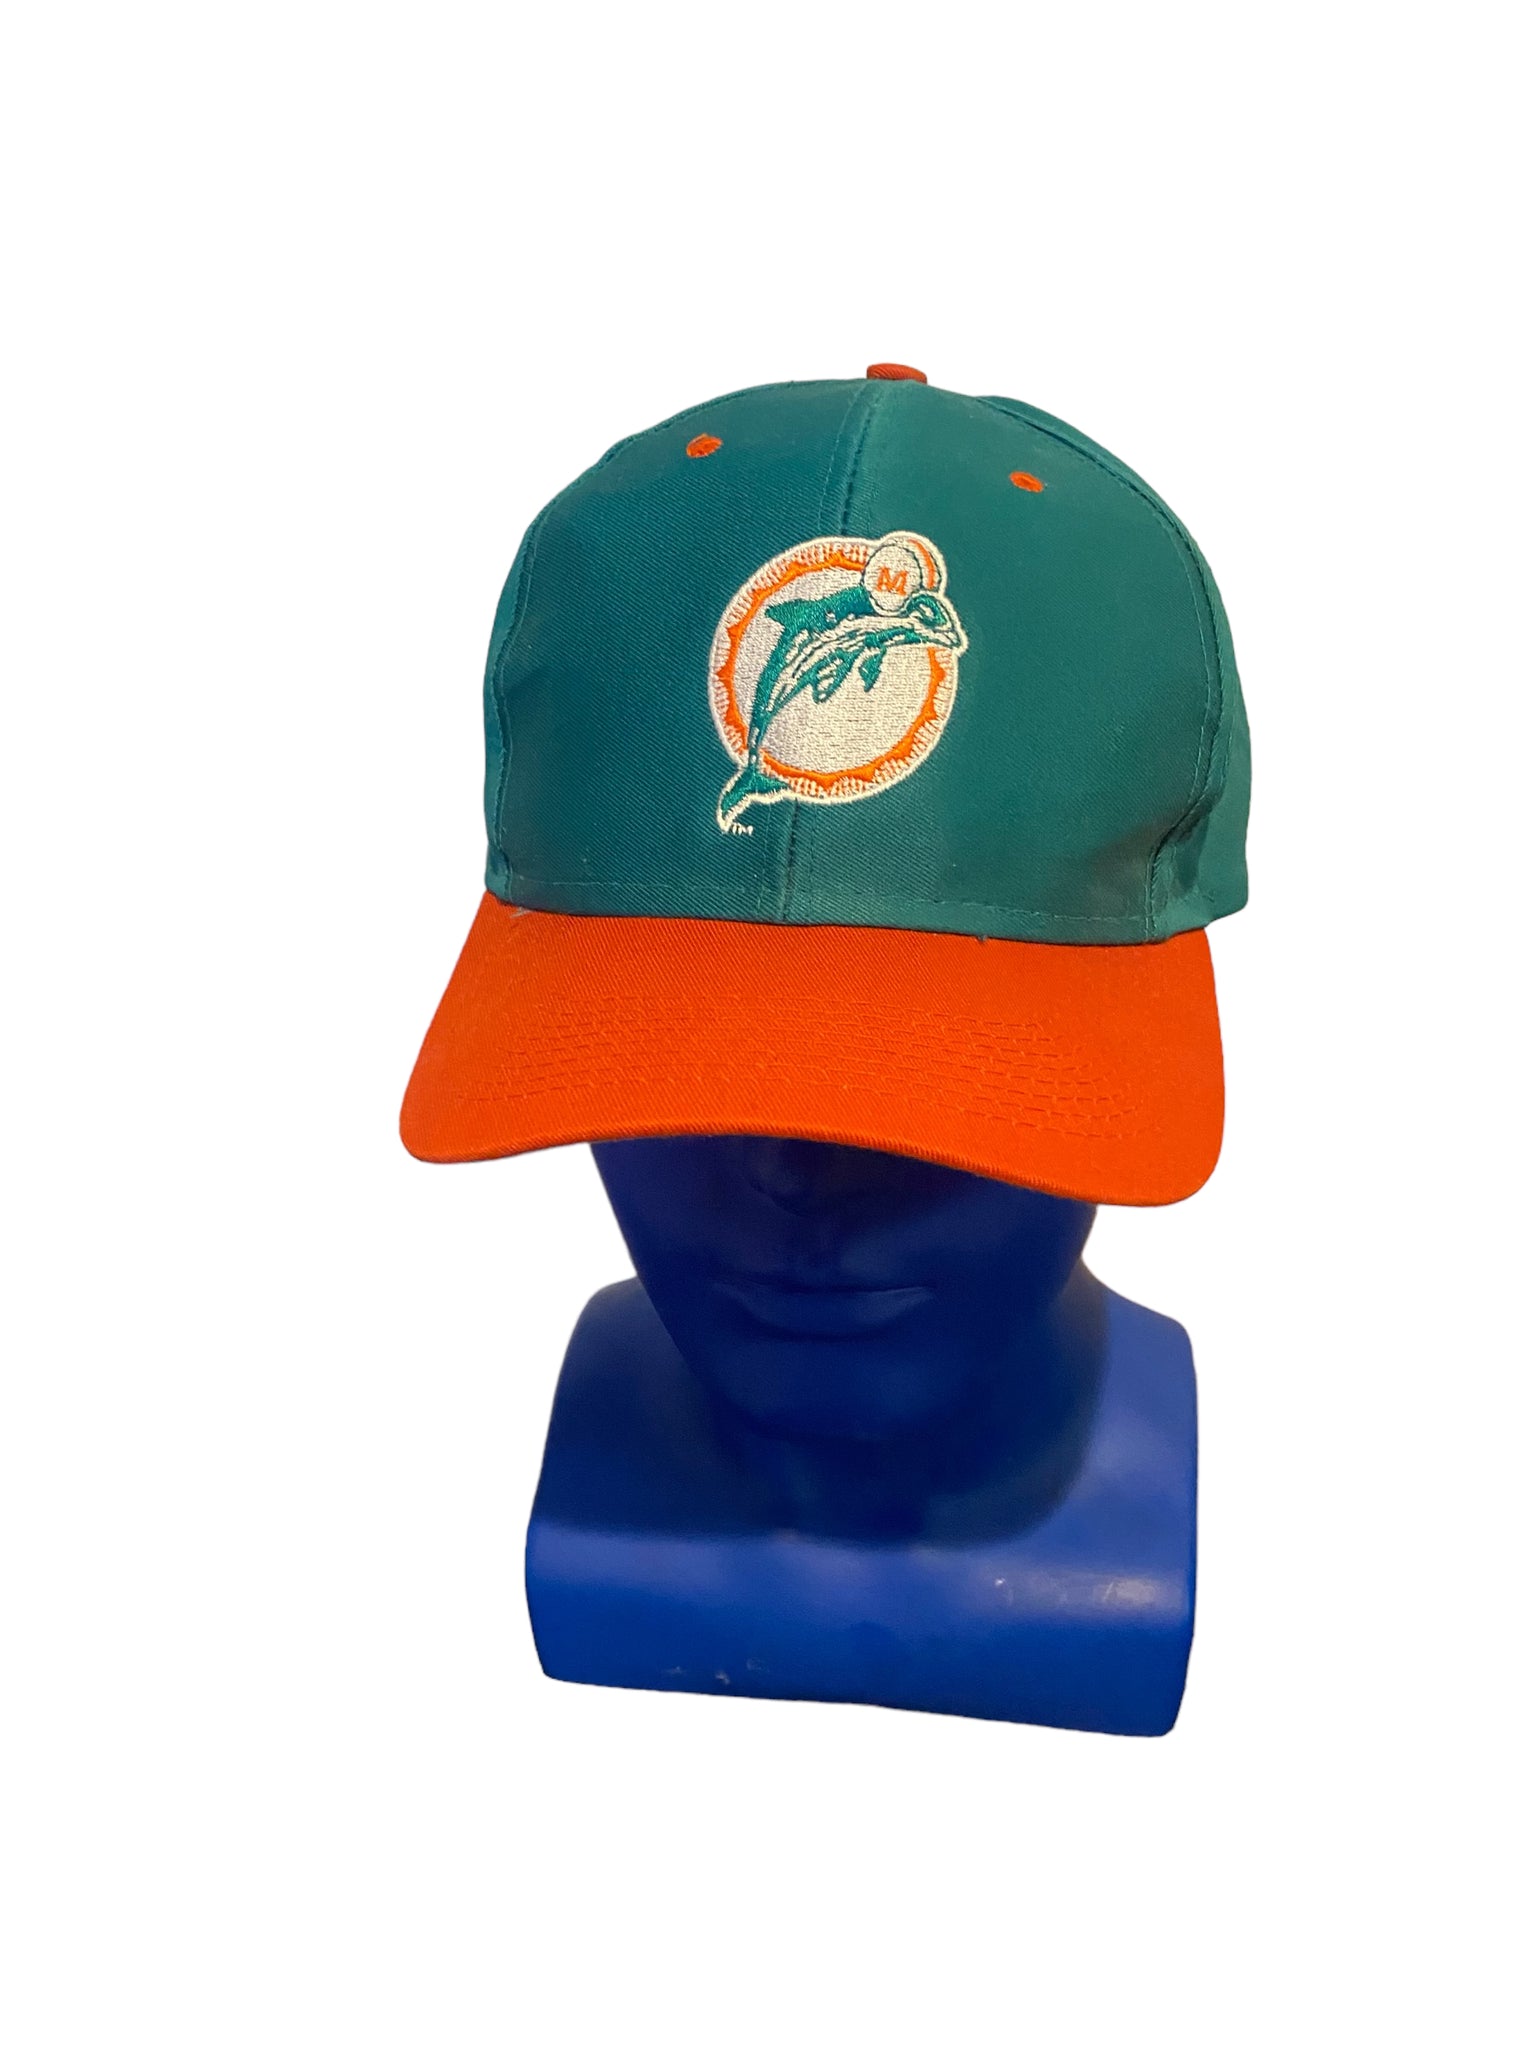 Vintage 90's Logo 7 Athletic Snapback Hat Cap Miami Dolphins NFL Green Orange